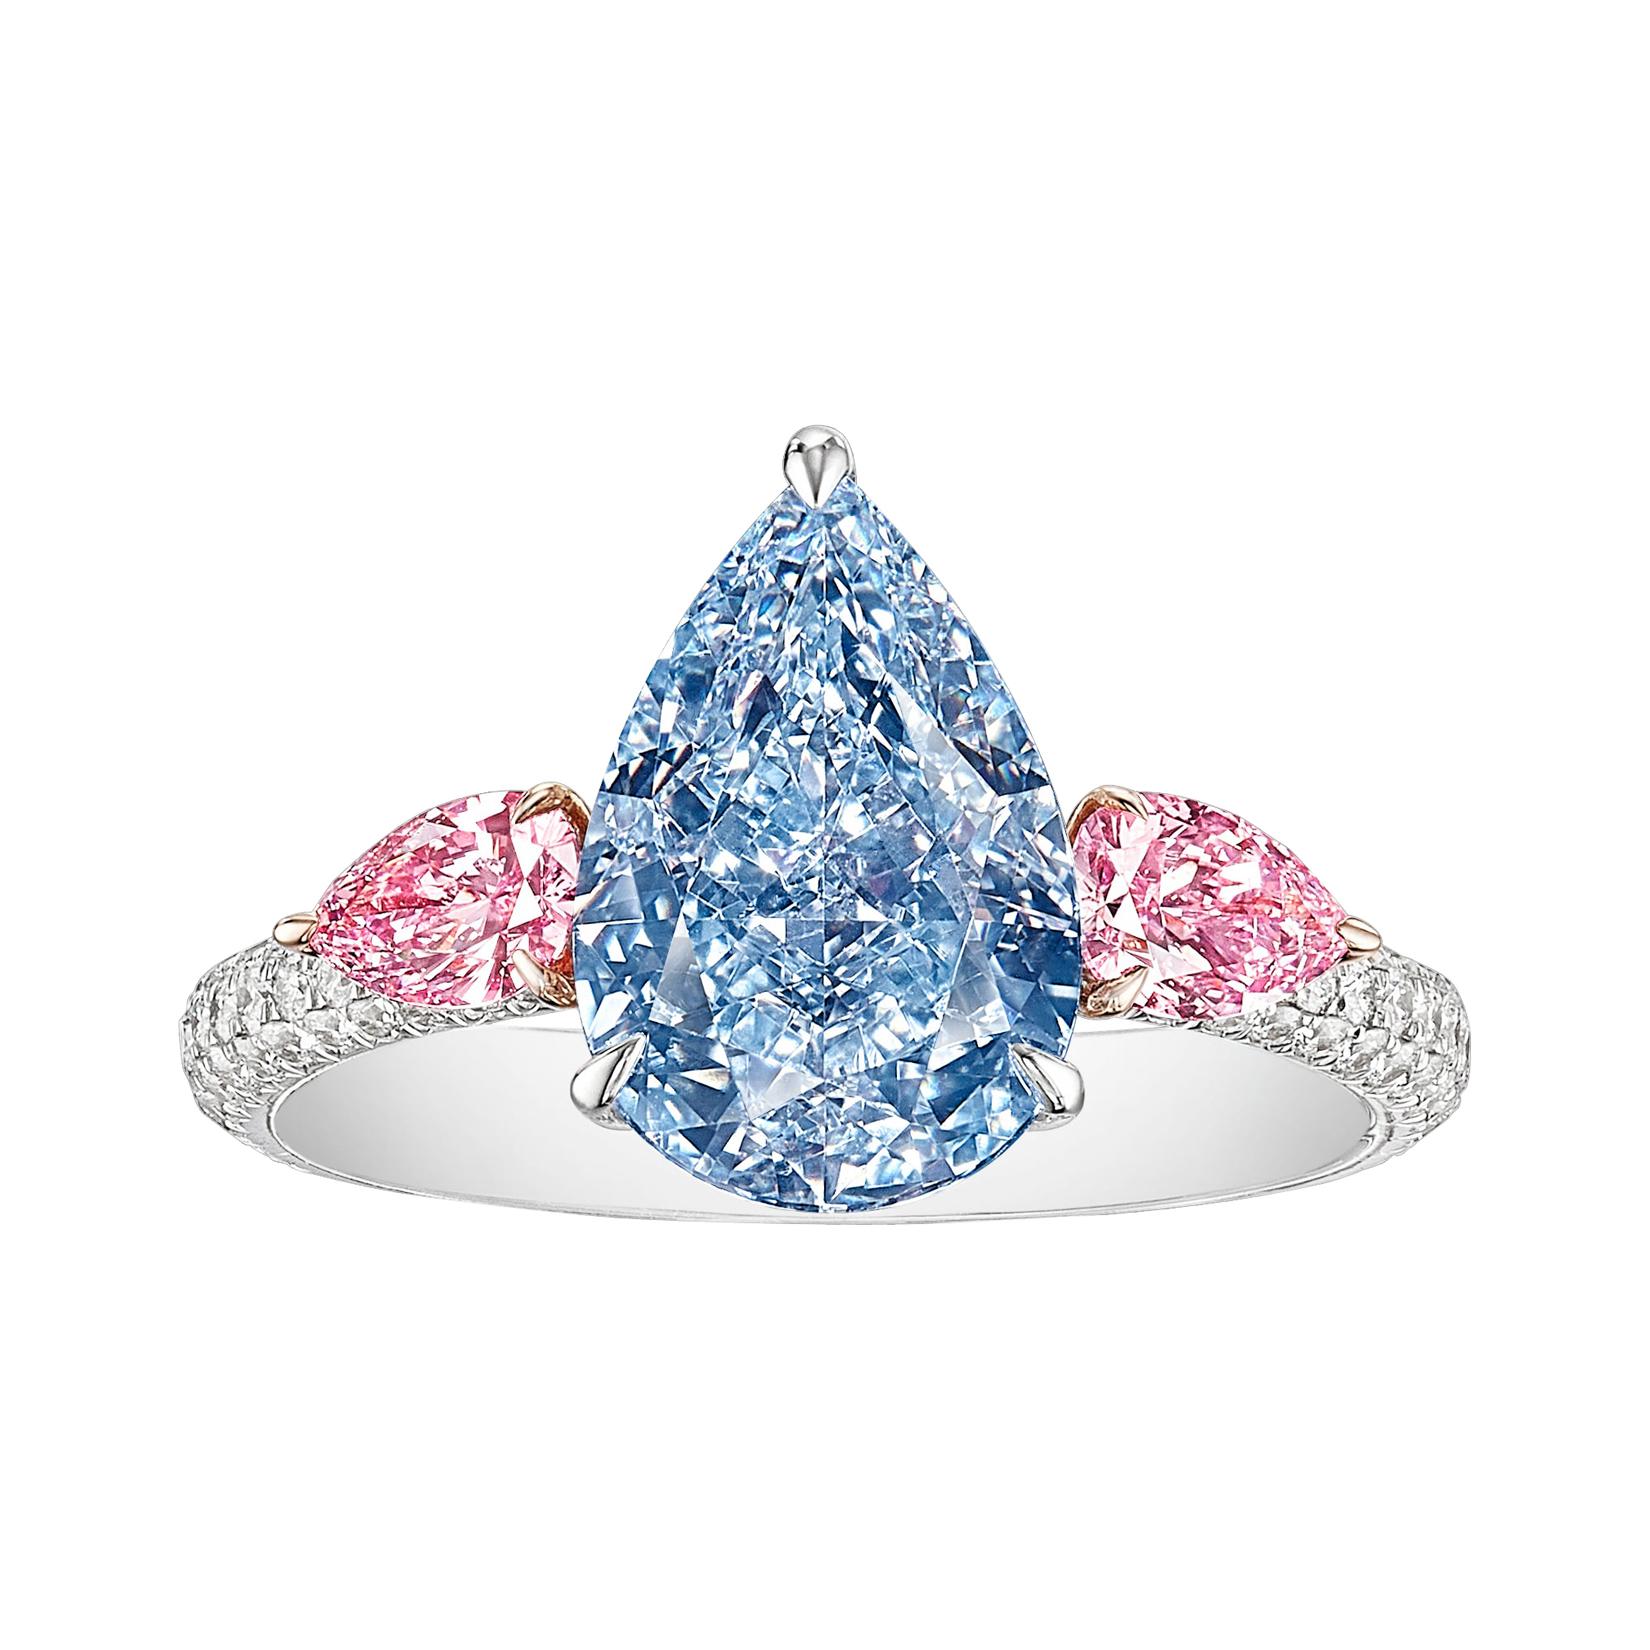 GIA Certified 3.97 Carat Fancy Intense Blue and Pink Diamond Ring in 18K Gold